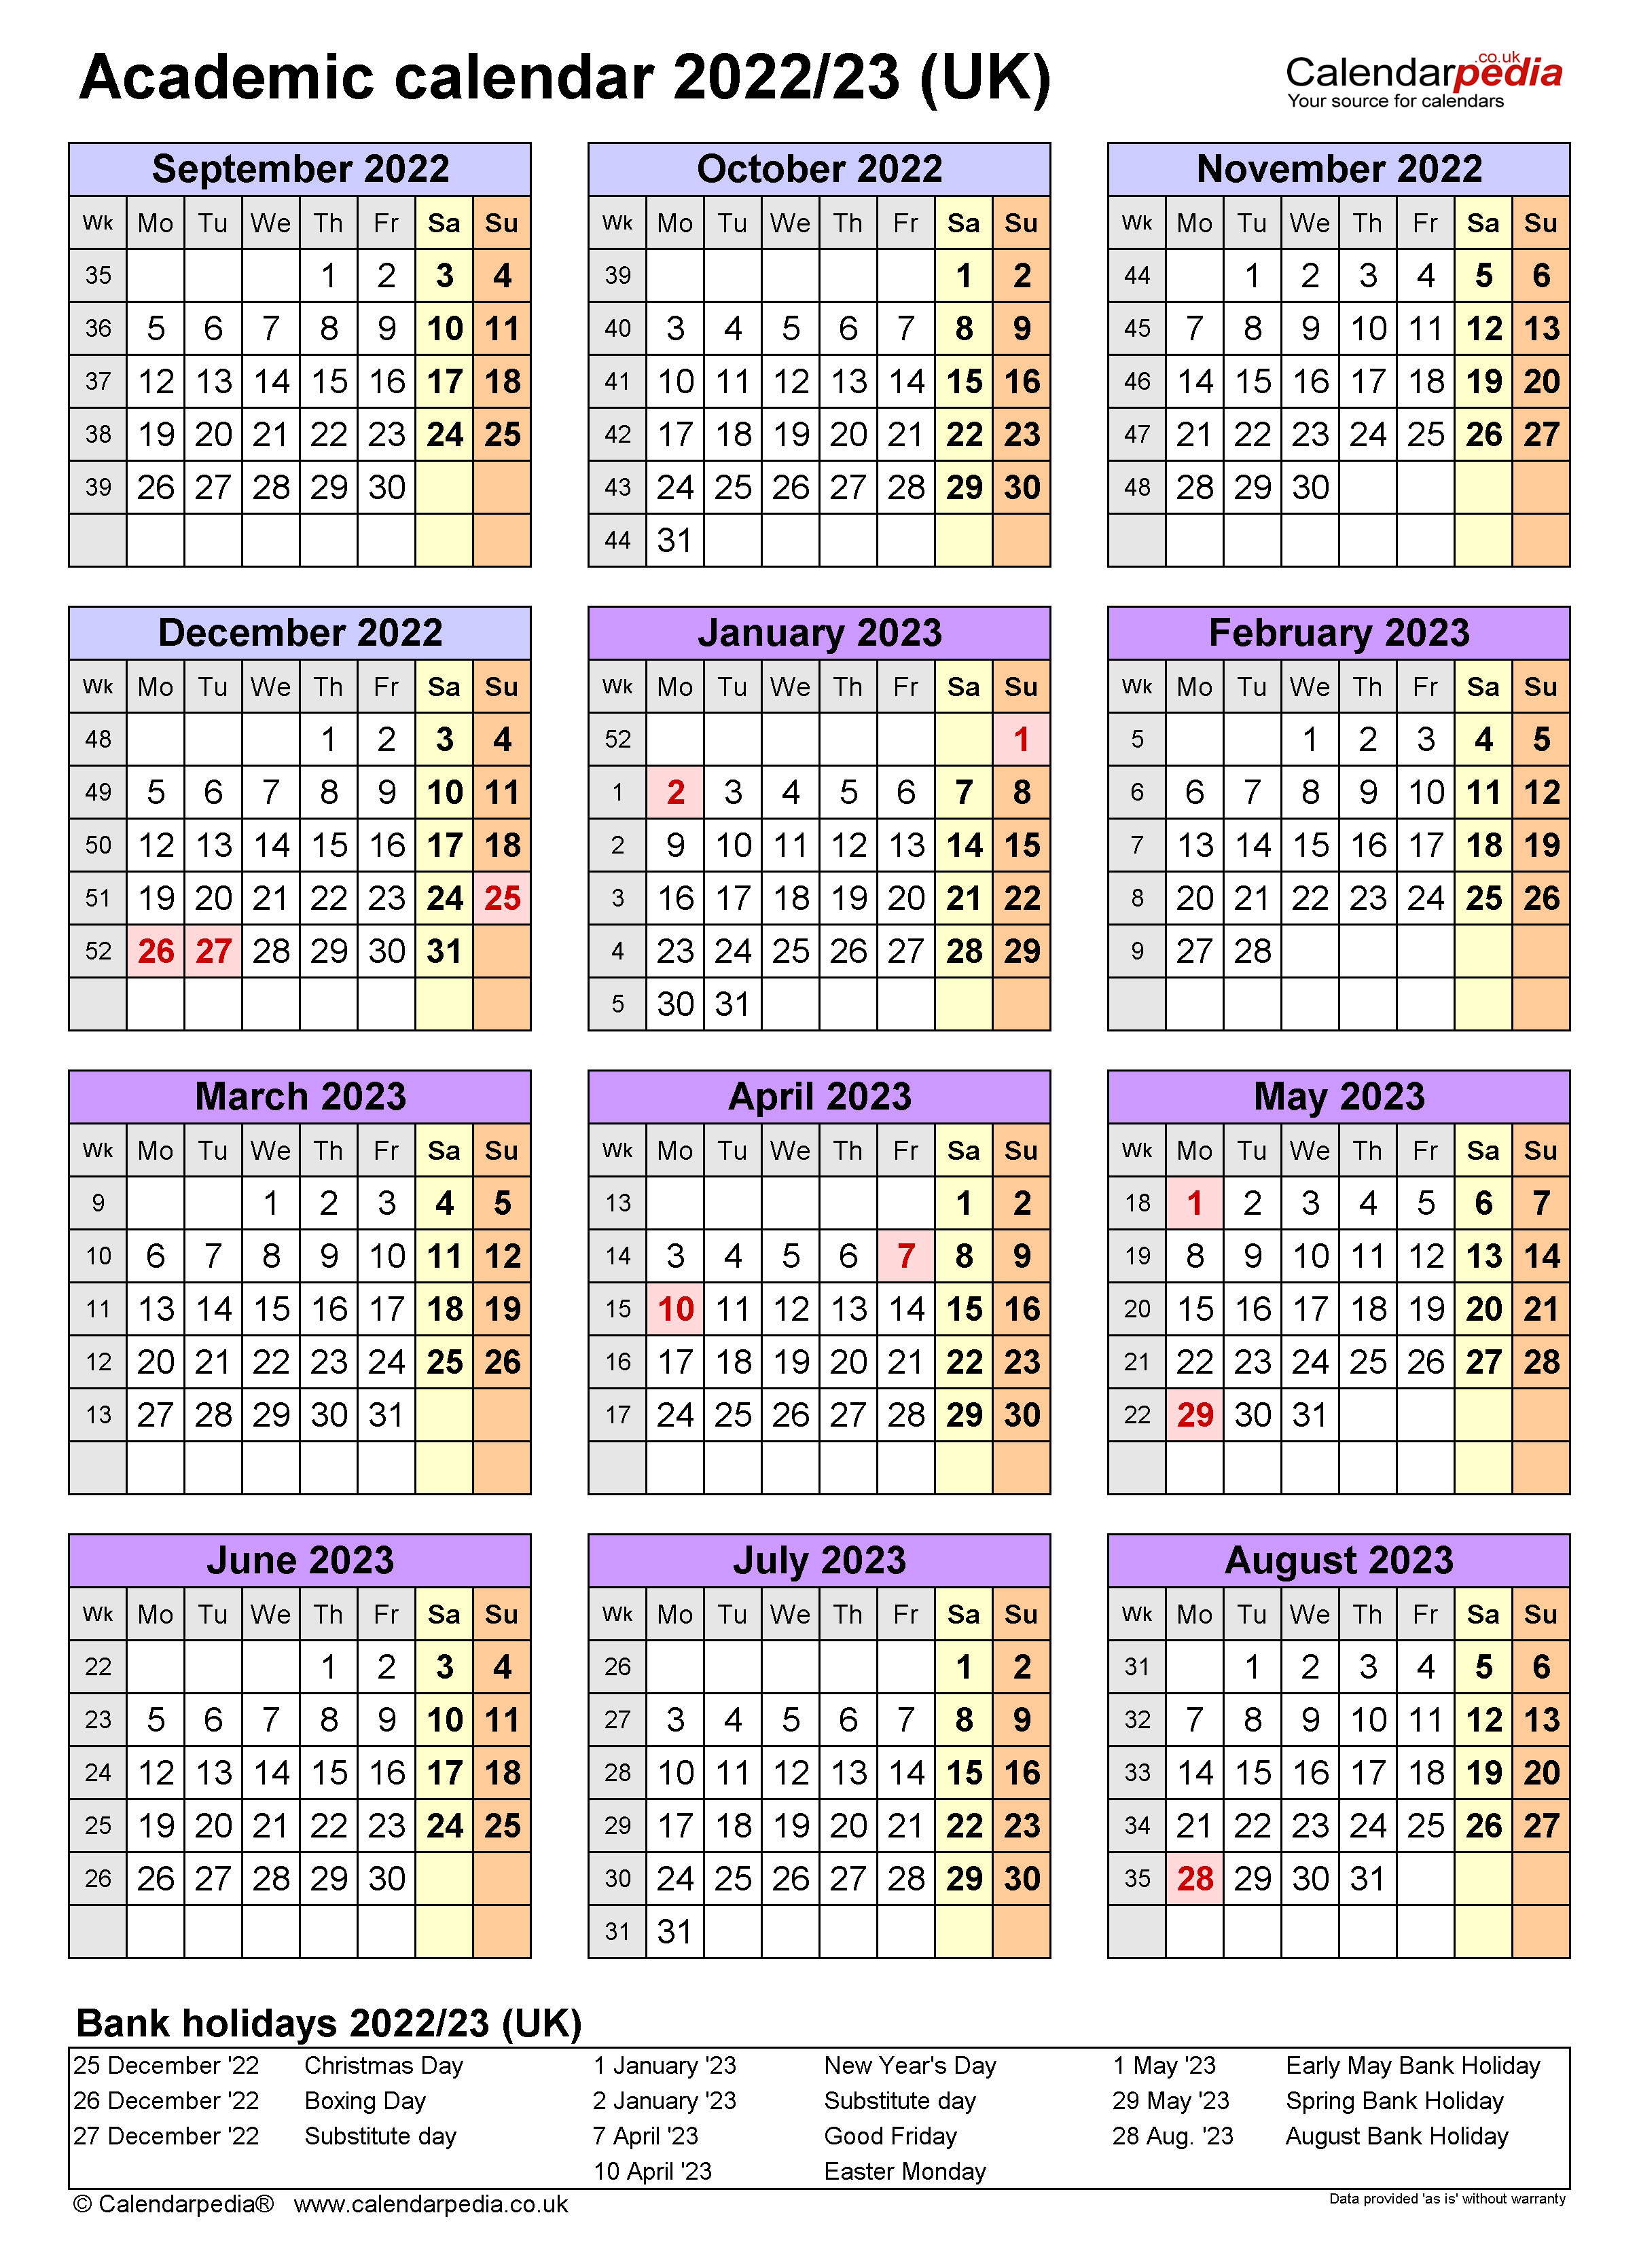 Academic Calendars 2022 23 UK Free Printable Excel Templates